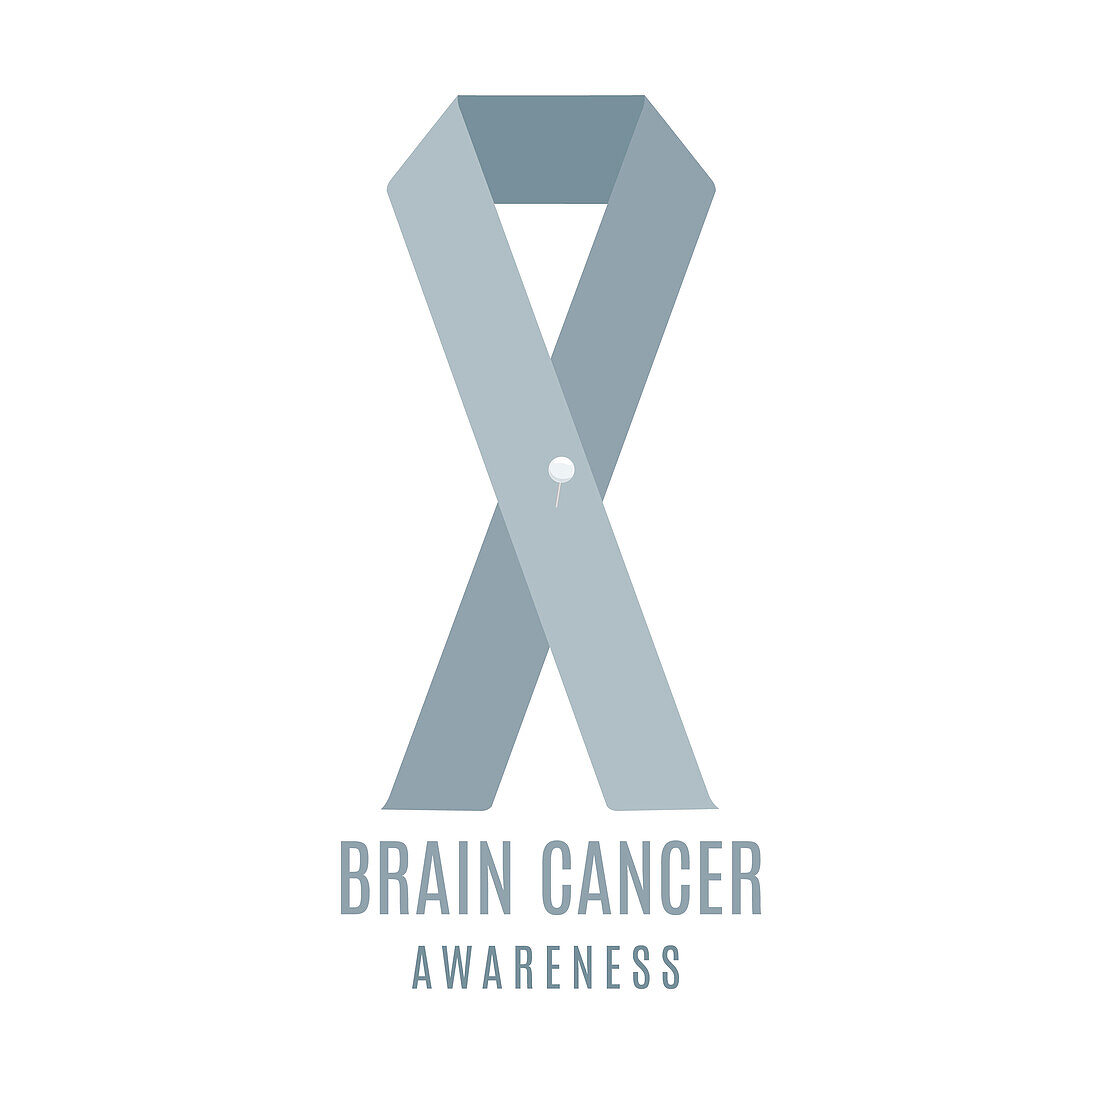 Brain cancer awareness, conceptual illustration